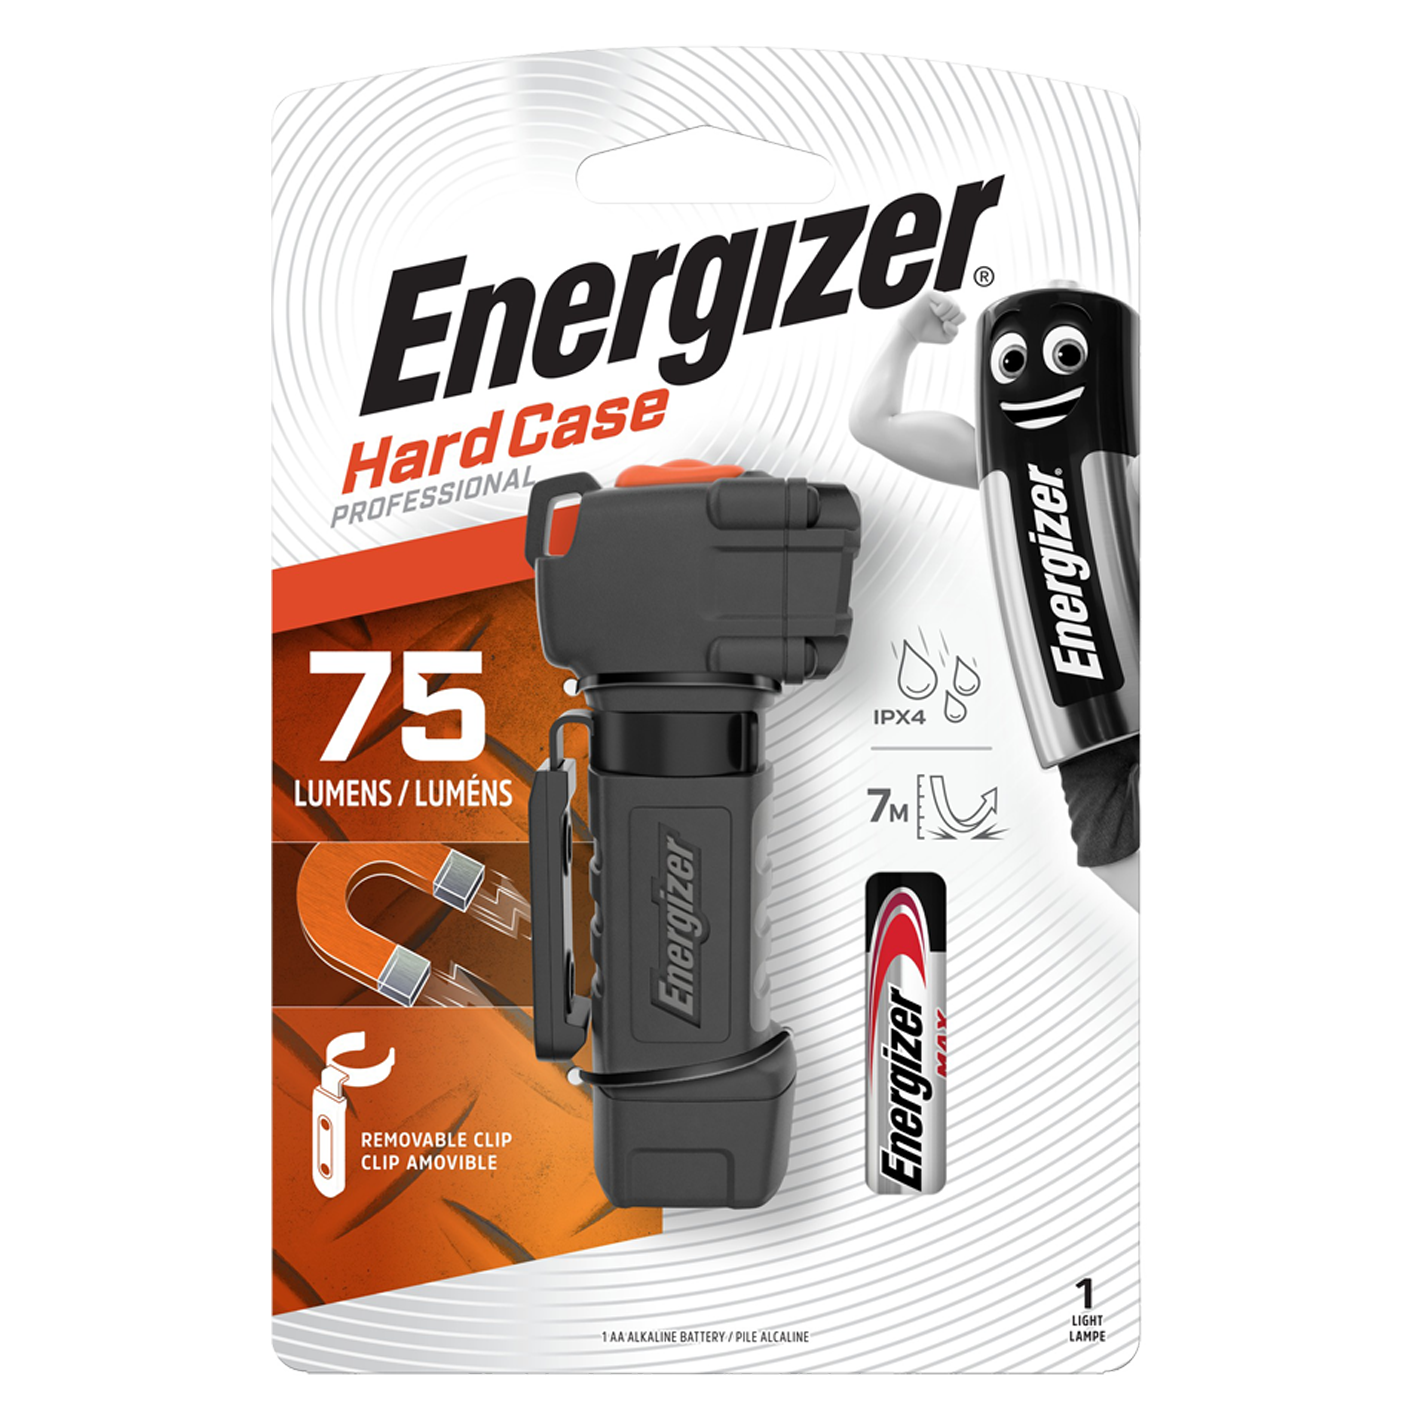 Energizer Hardcase Multiuse Compact Mini Light With 1 x AA Battery